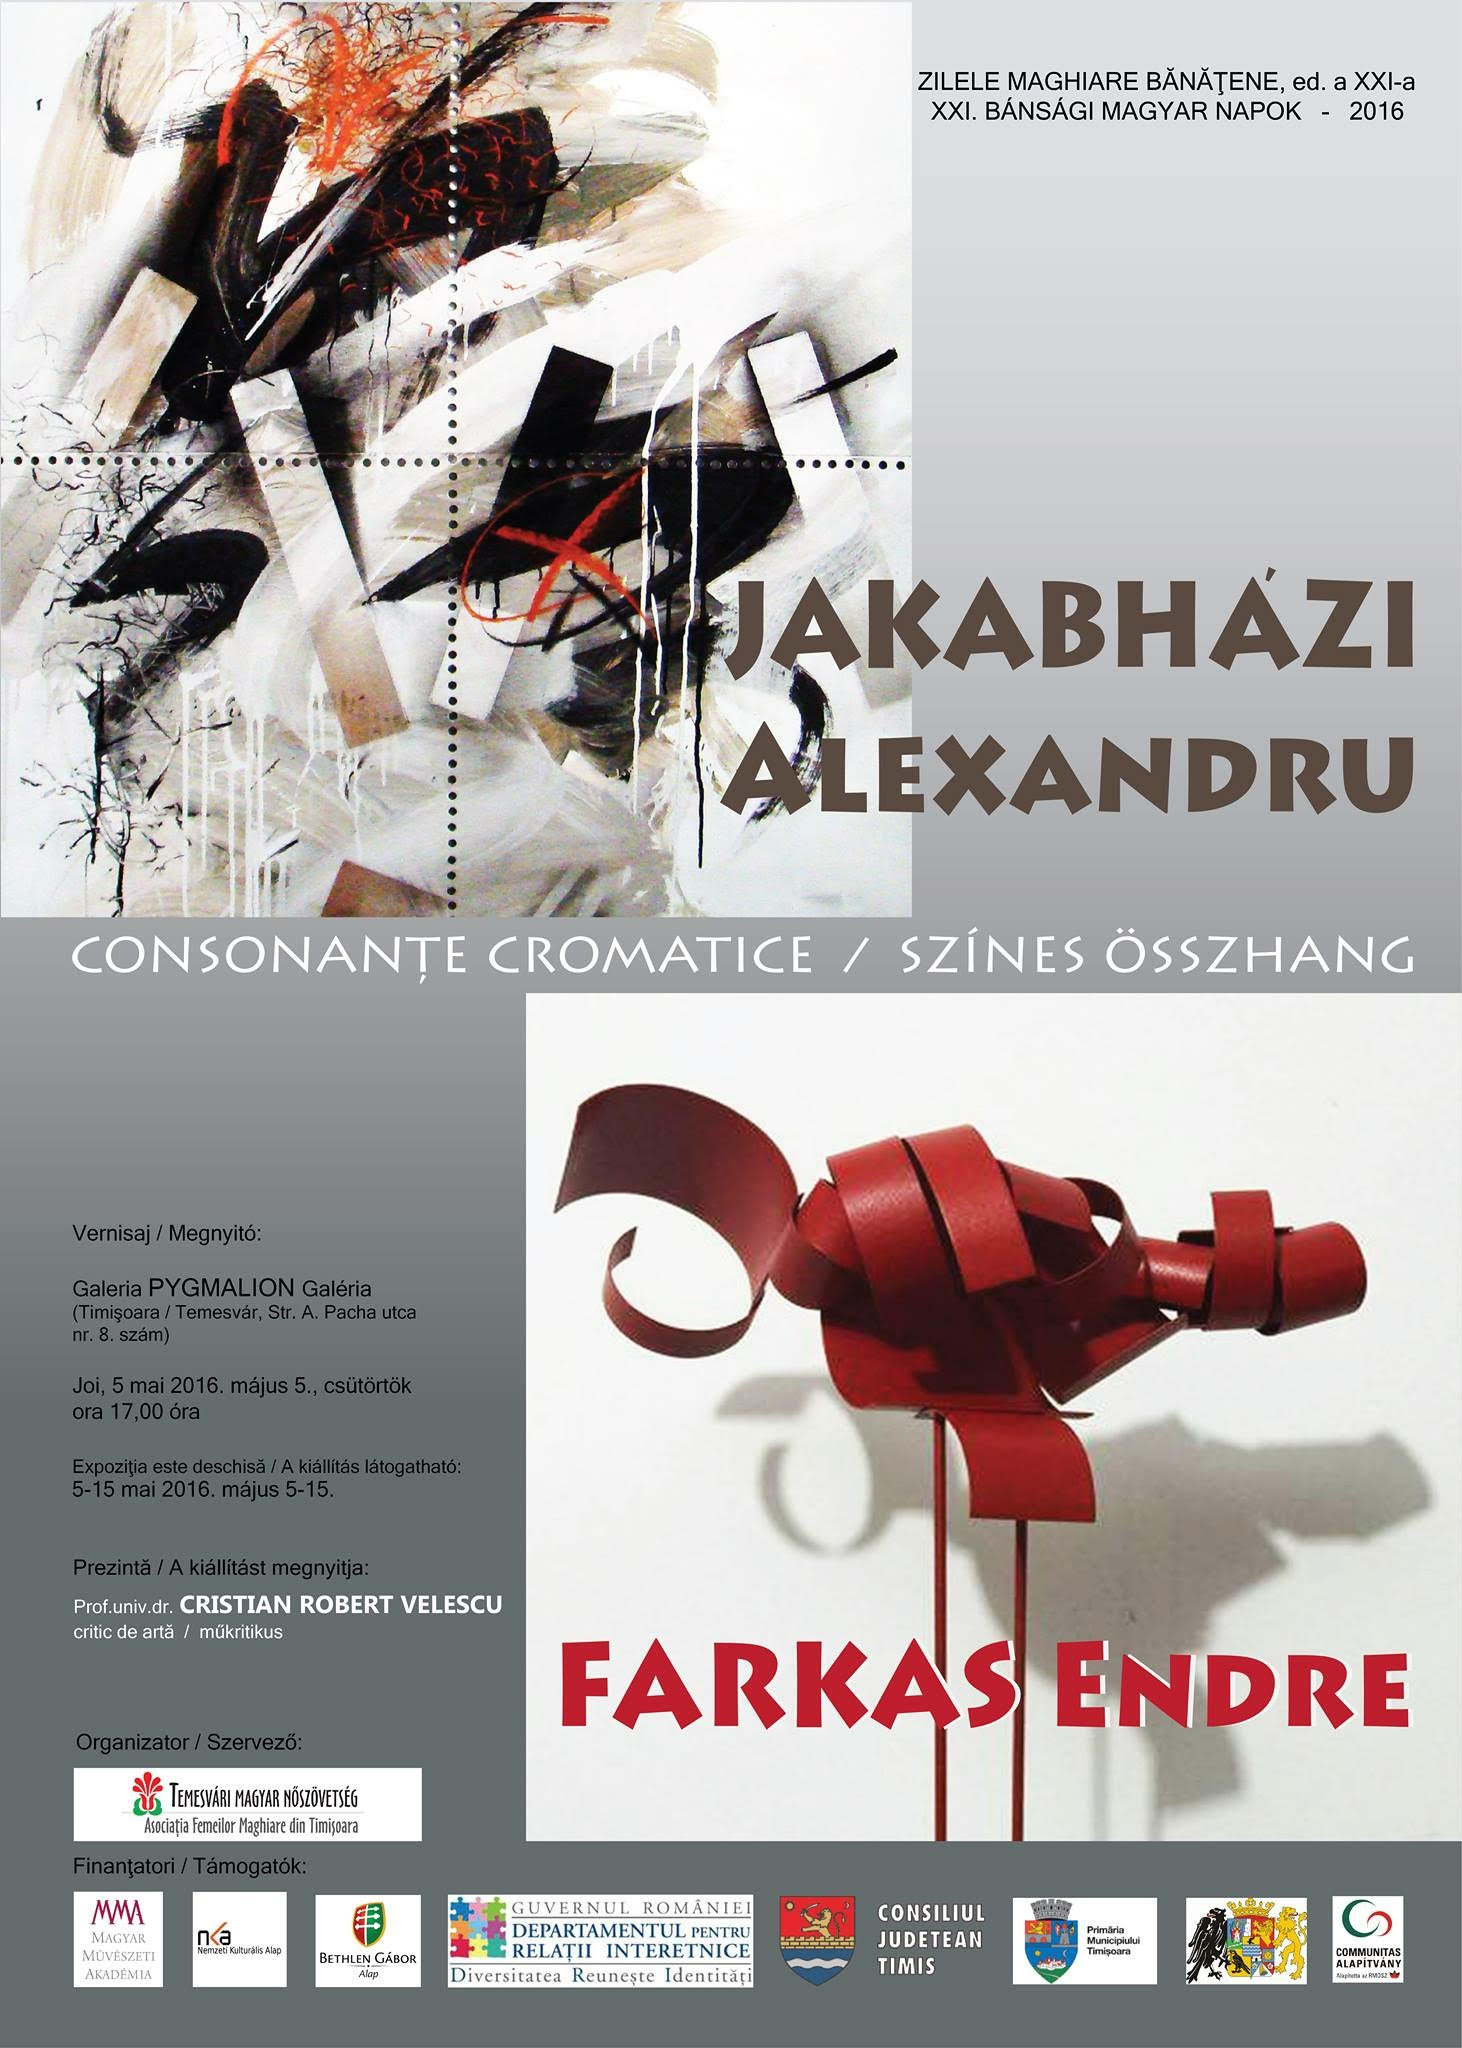 Endre Farkas și Alexandru Jakabhazi @ Galeria Pygmalion, Timișoara